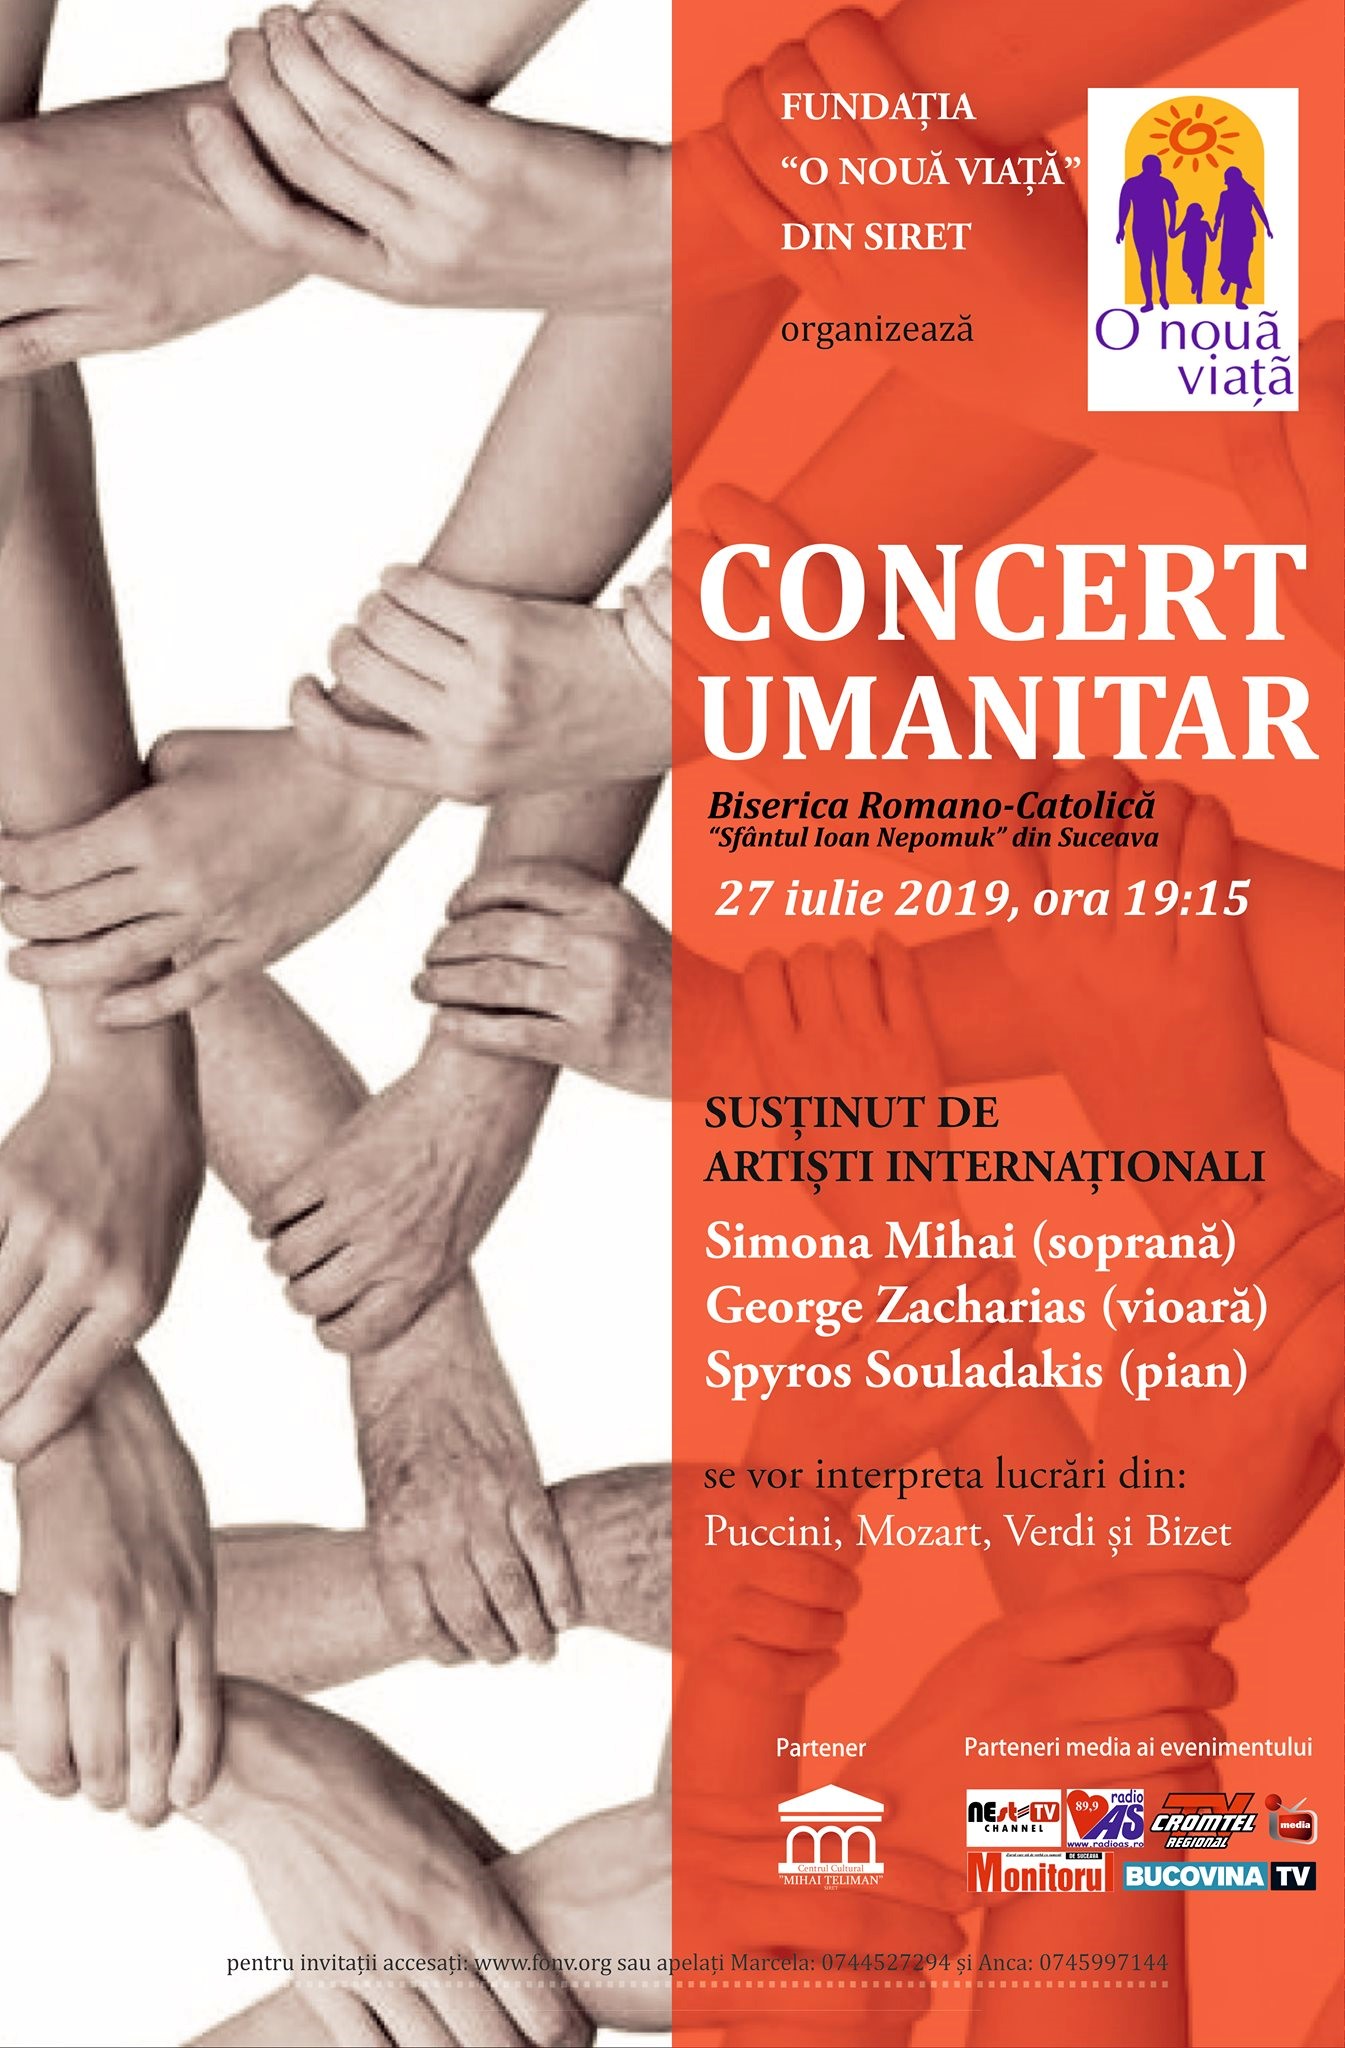 Concert umanitar